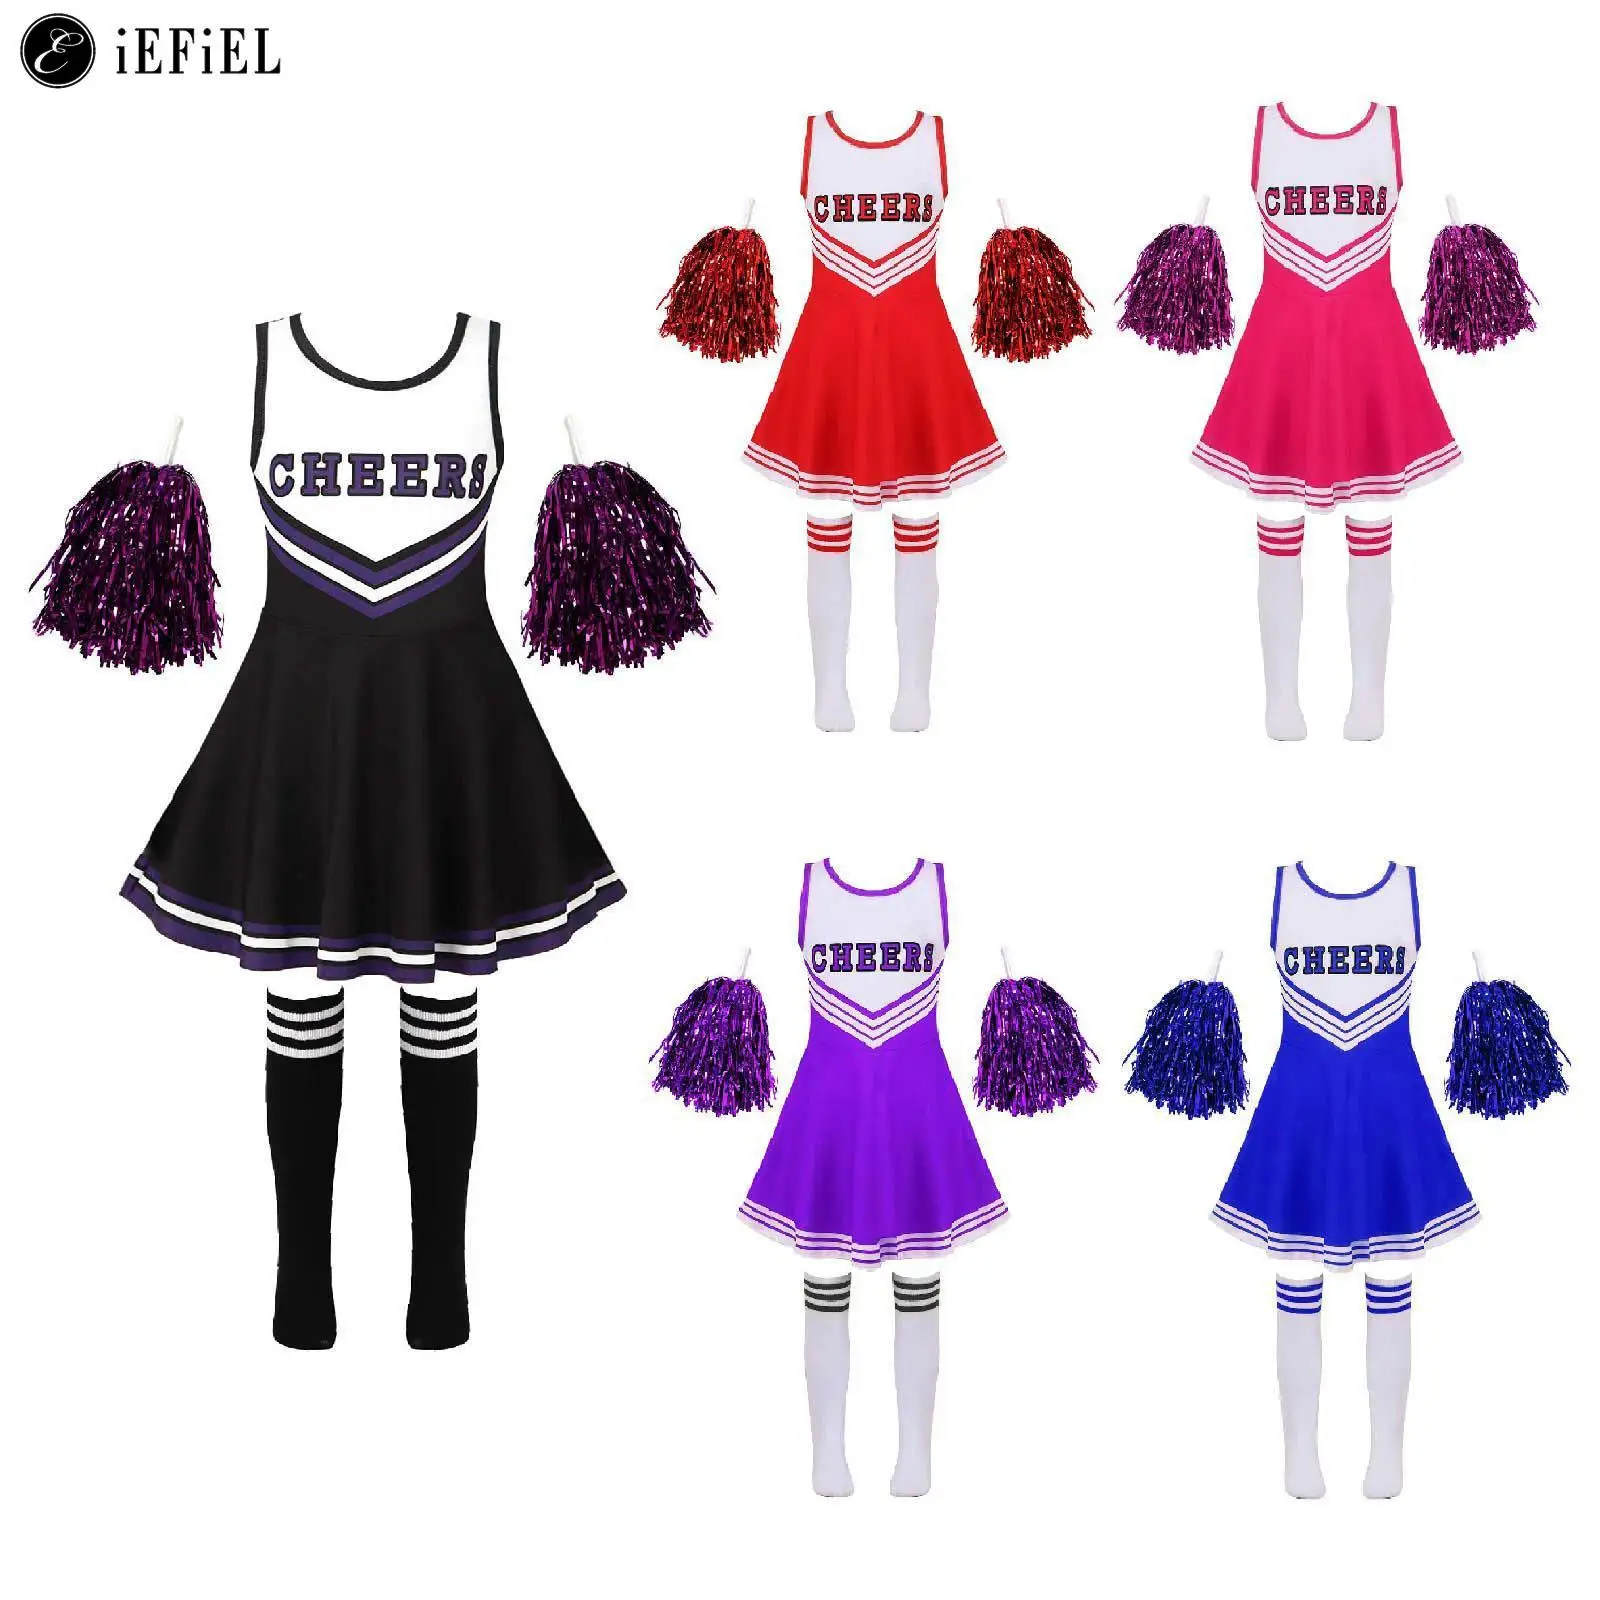 High Schoolgirls Cheer Leader Uniform Dance Cheerleading Dress Outfit with Stockings 2 Pom Poms Halloween Cosplay Costume